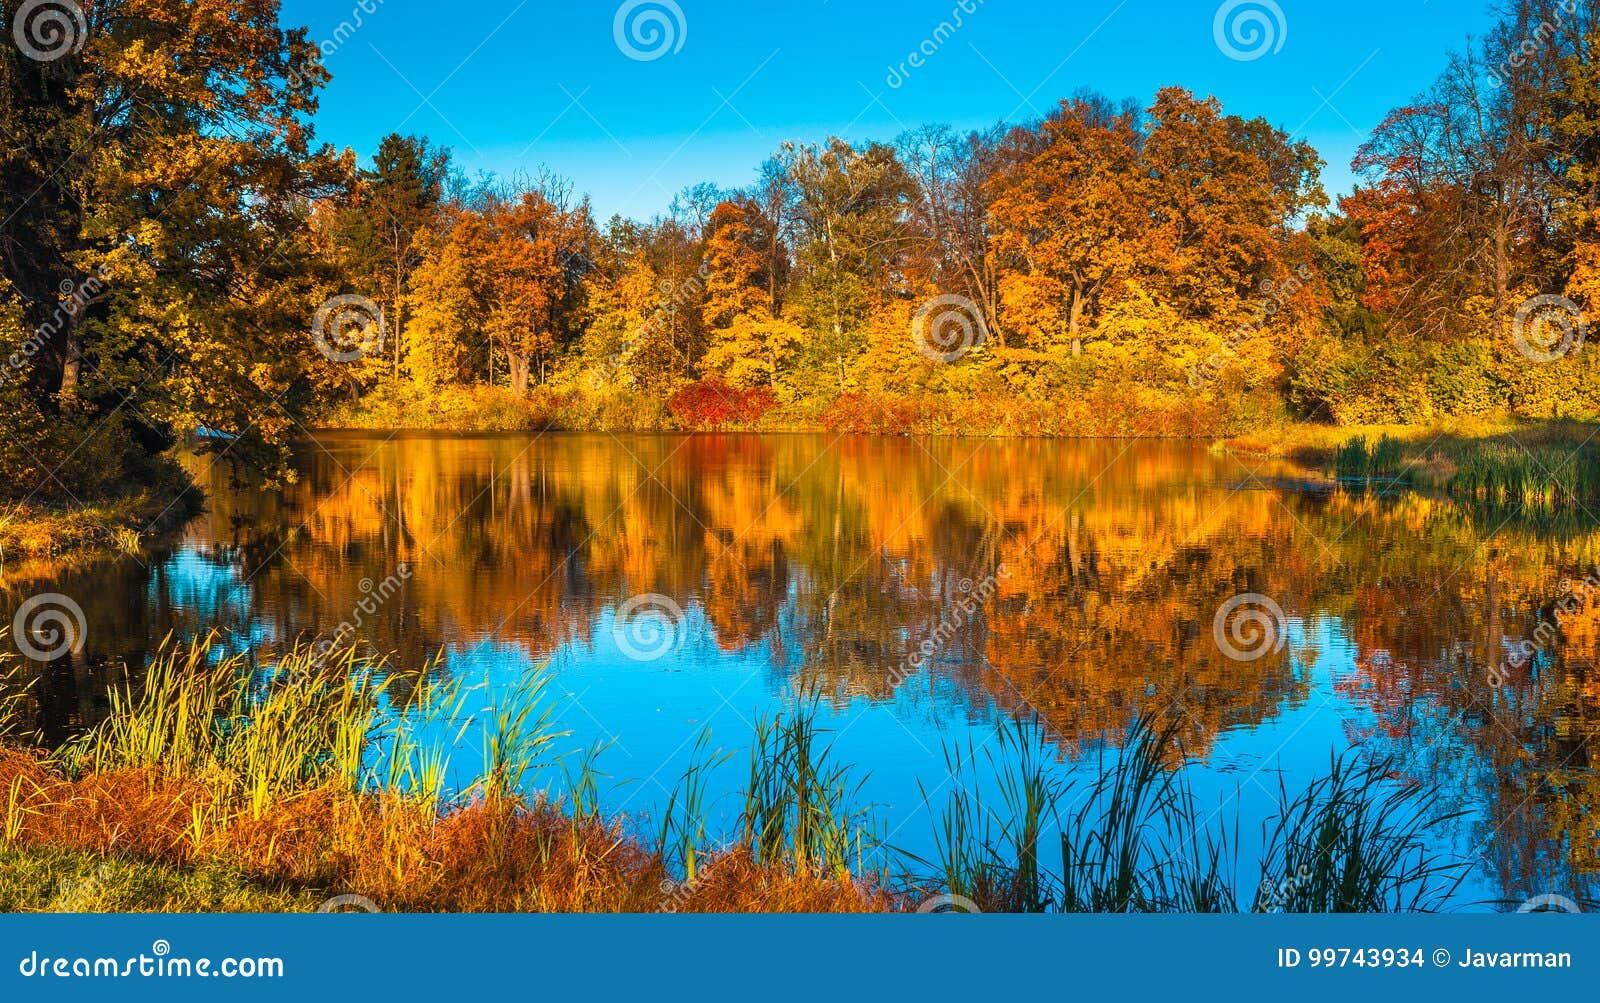 autunm landscape, perfect fall scenery